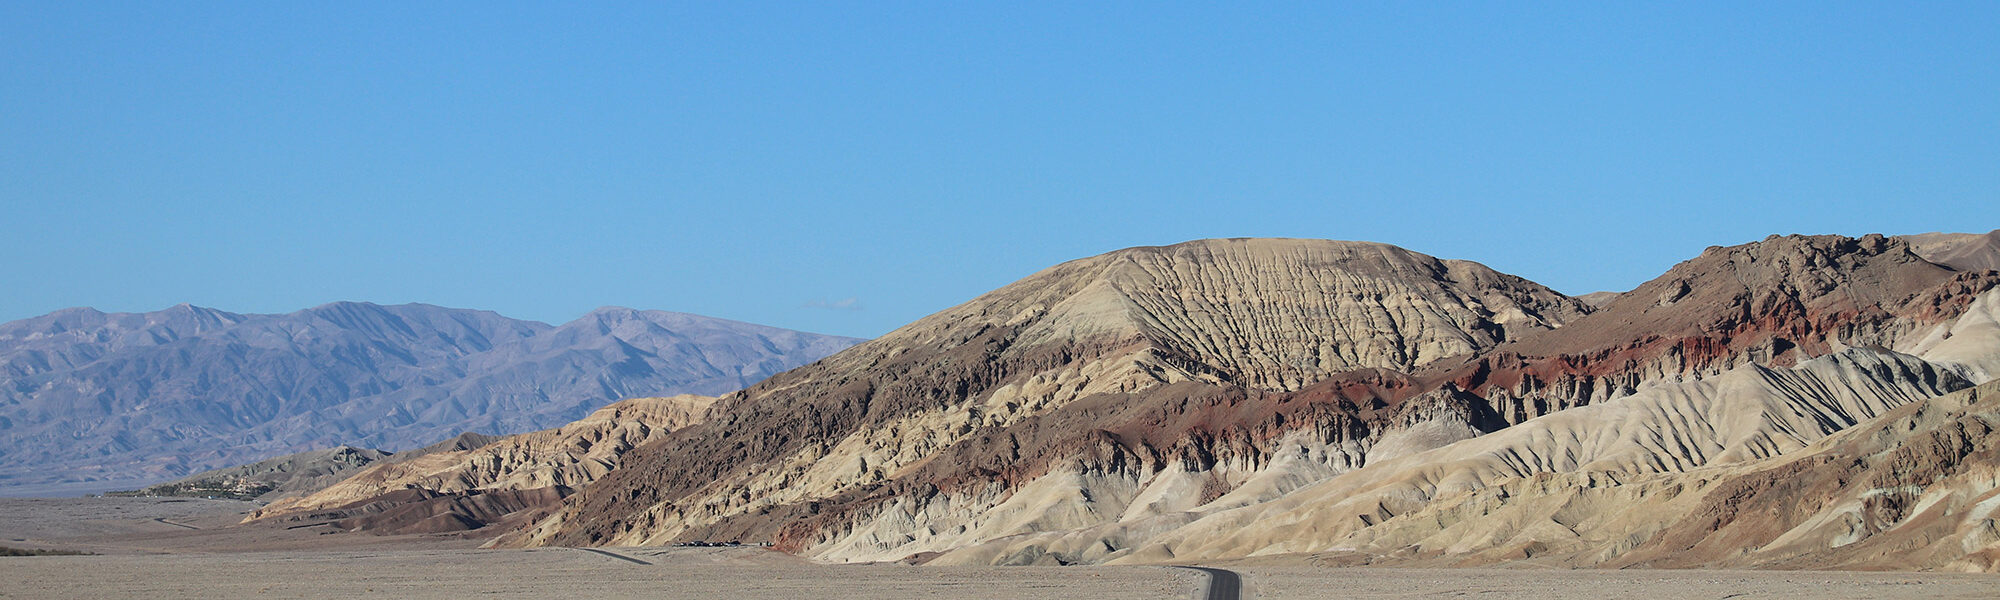 Amerika dag 18 - Death Valley National Park - Badwater Road